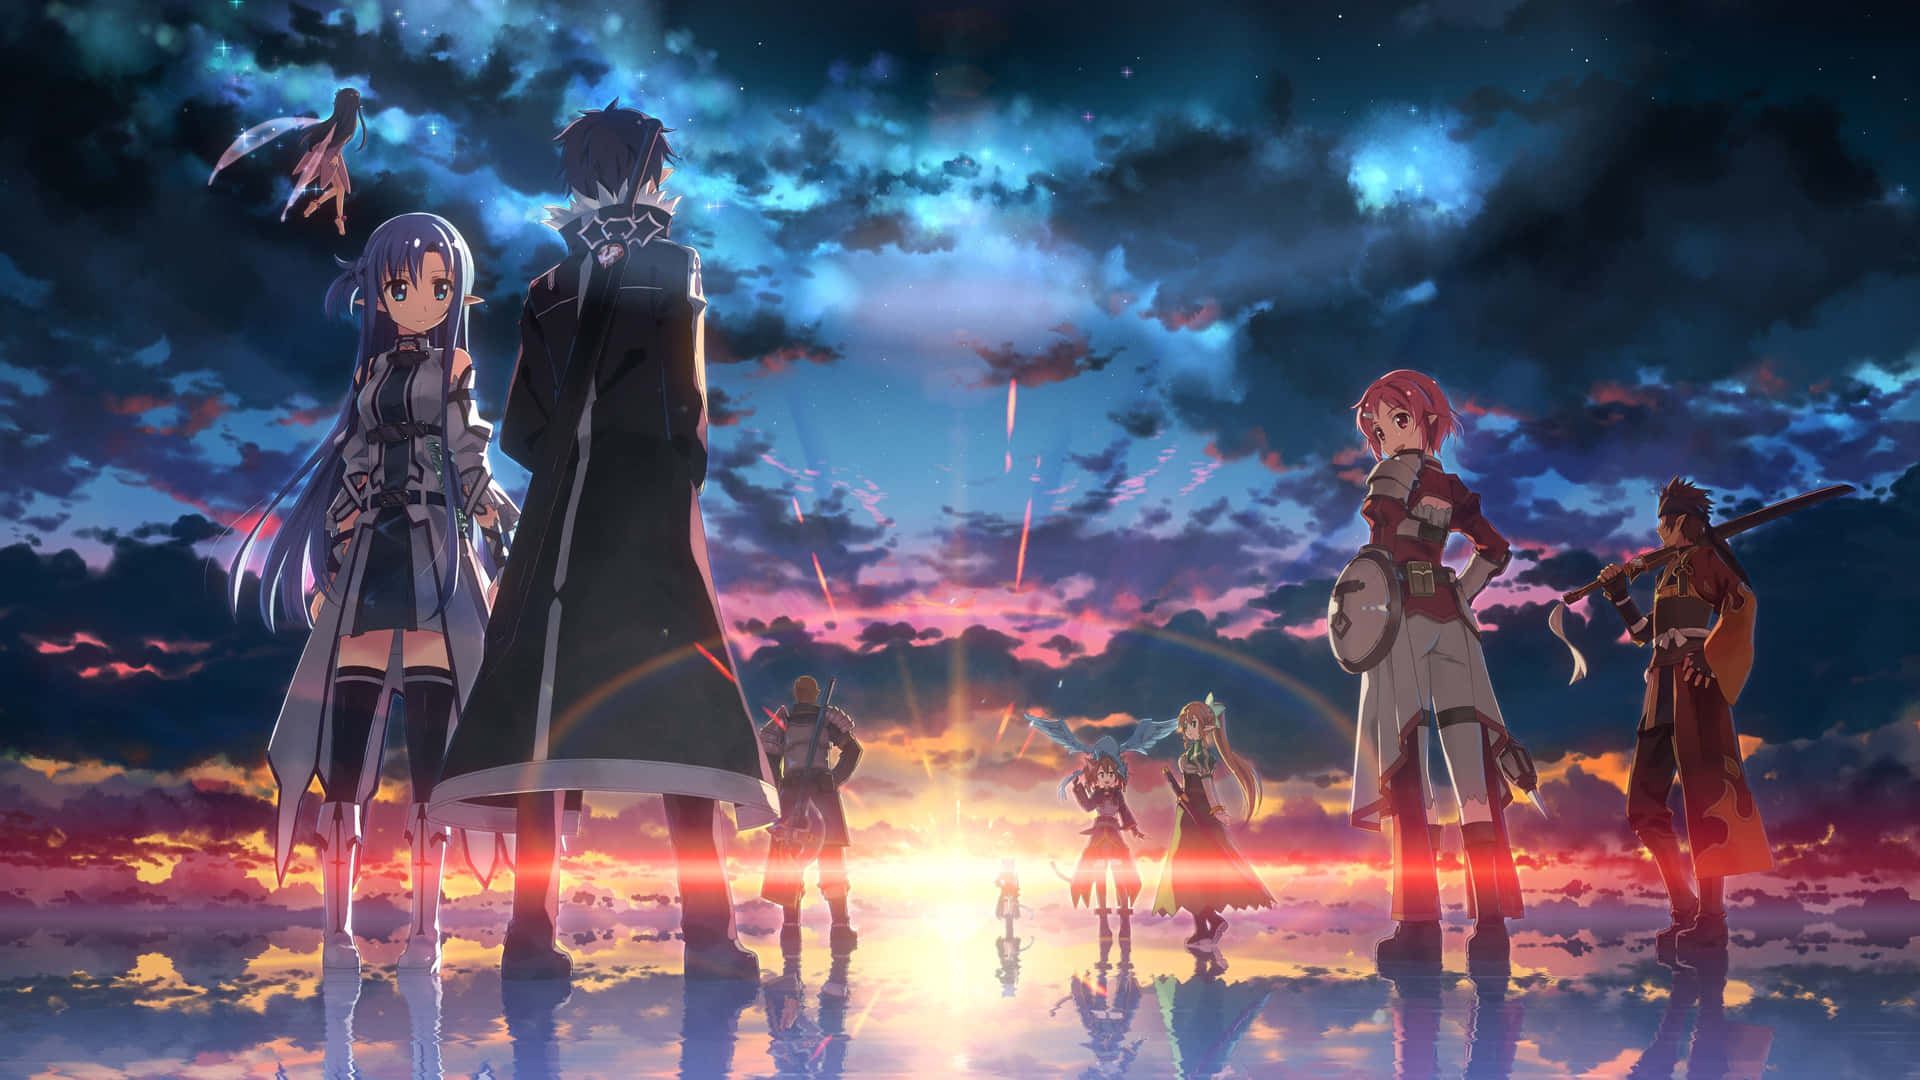 Enchanting Anime Landscape at Sunset